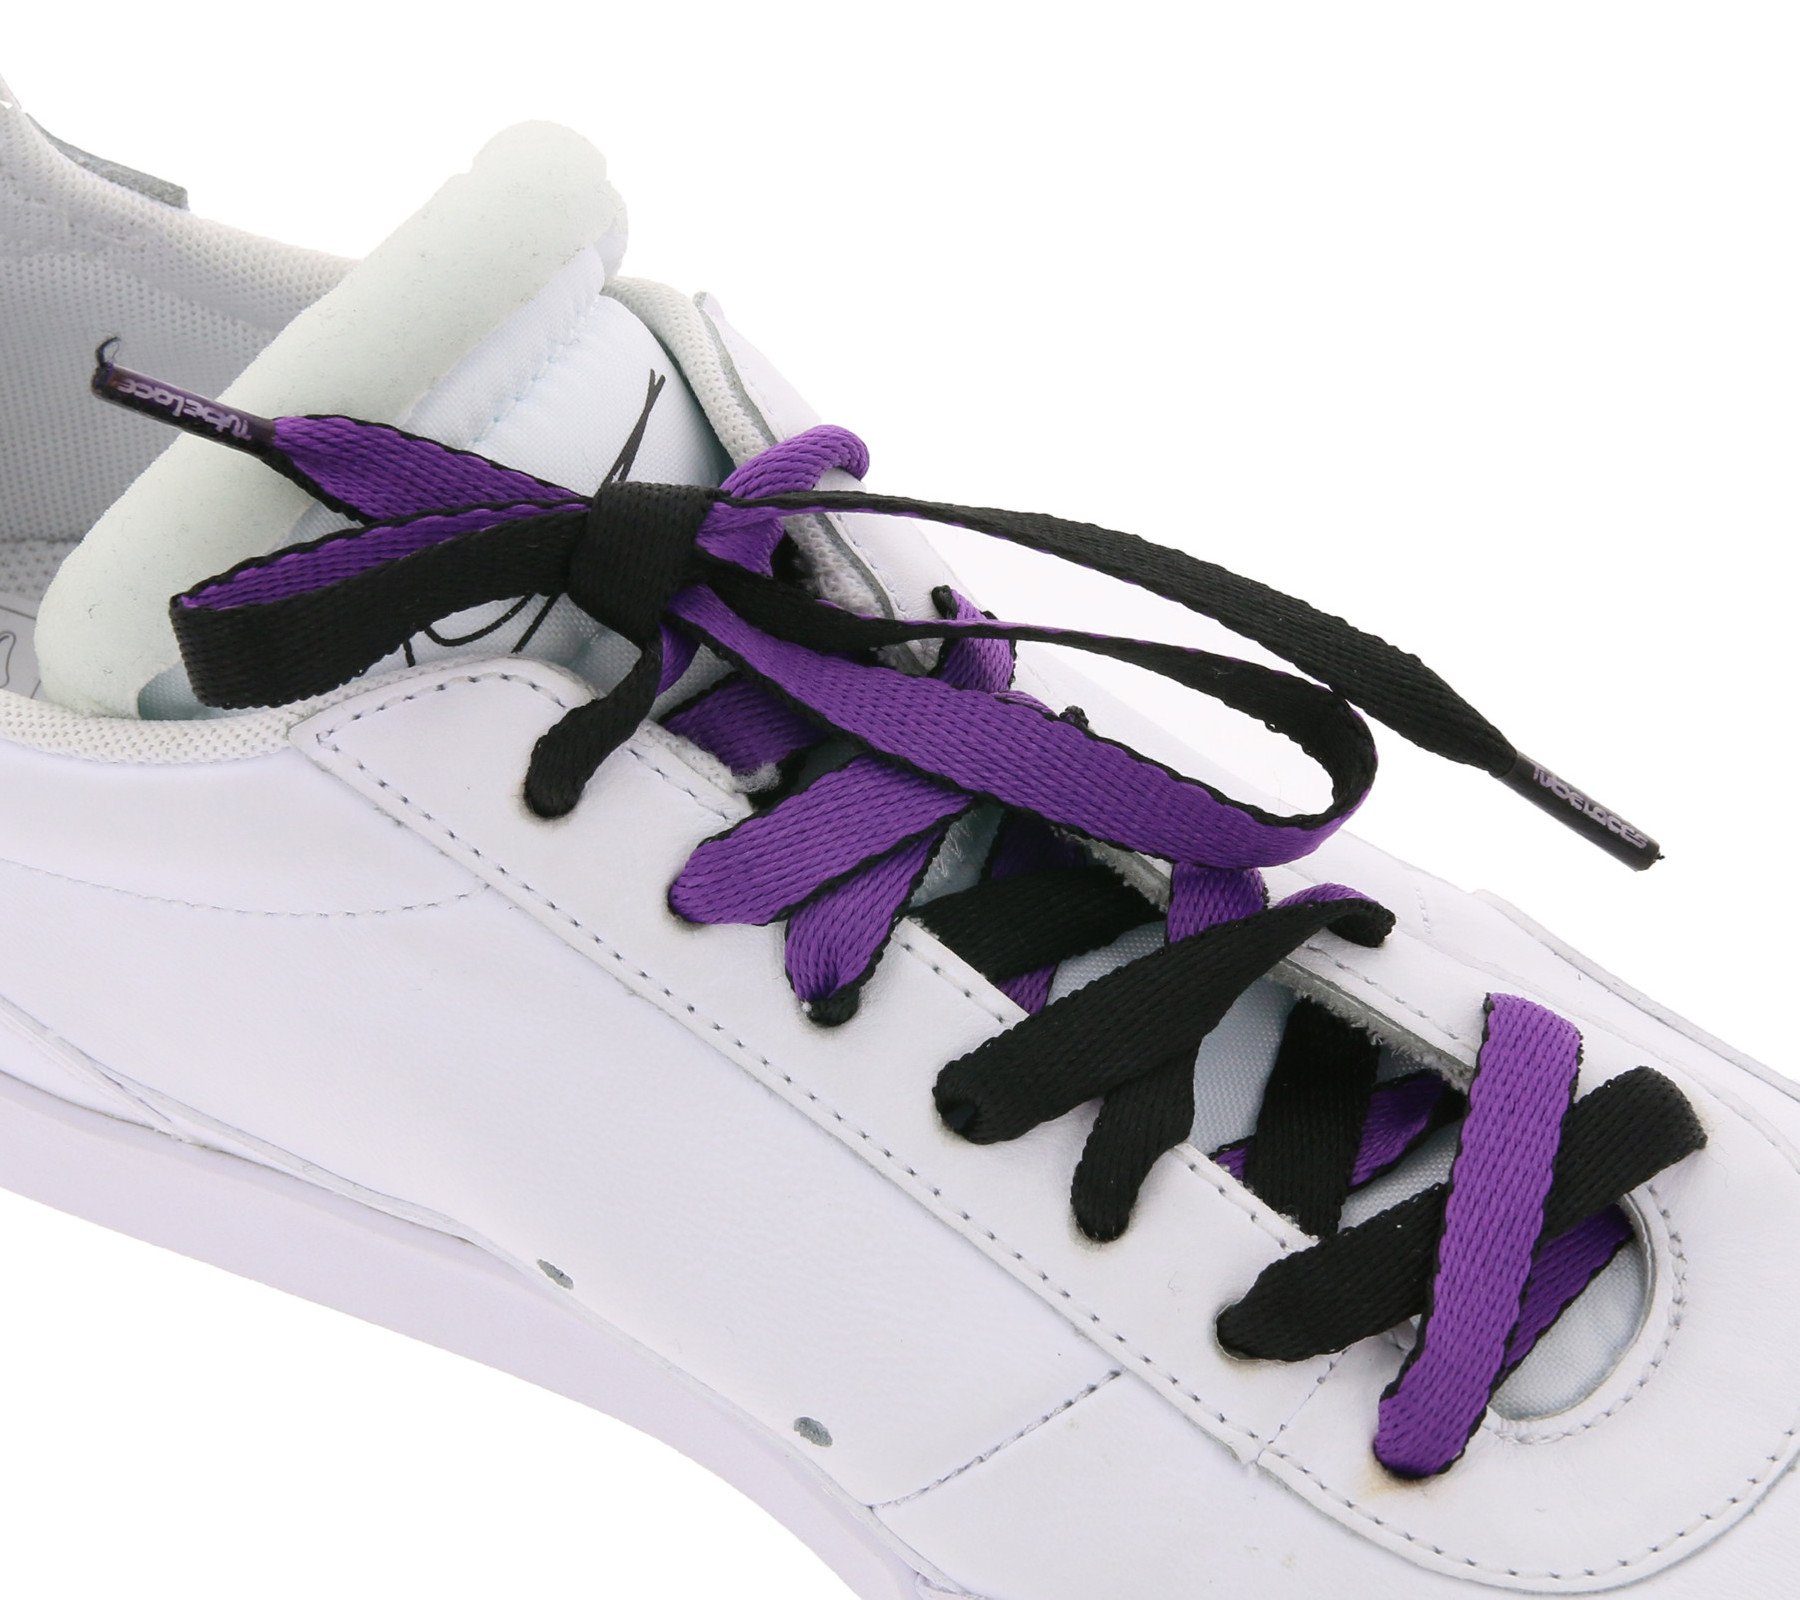 Tubelaces Schnürsenkel TubeLaces Schuhe Schnürbänder trendige Schnürsenkel Schuhbänder Schwarz/Violett